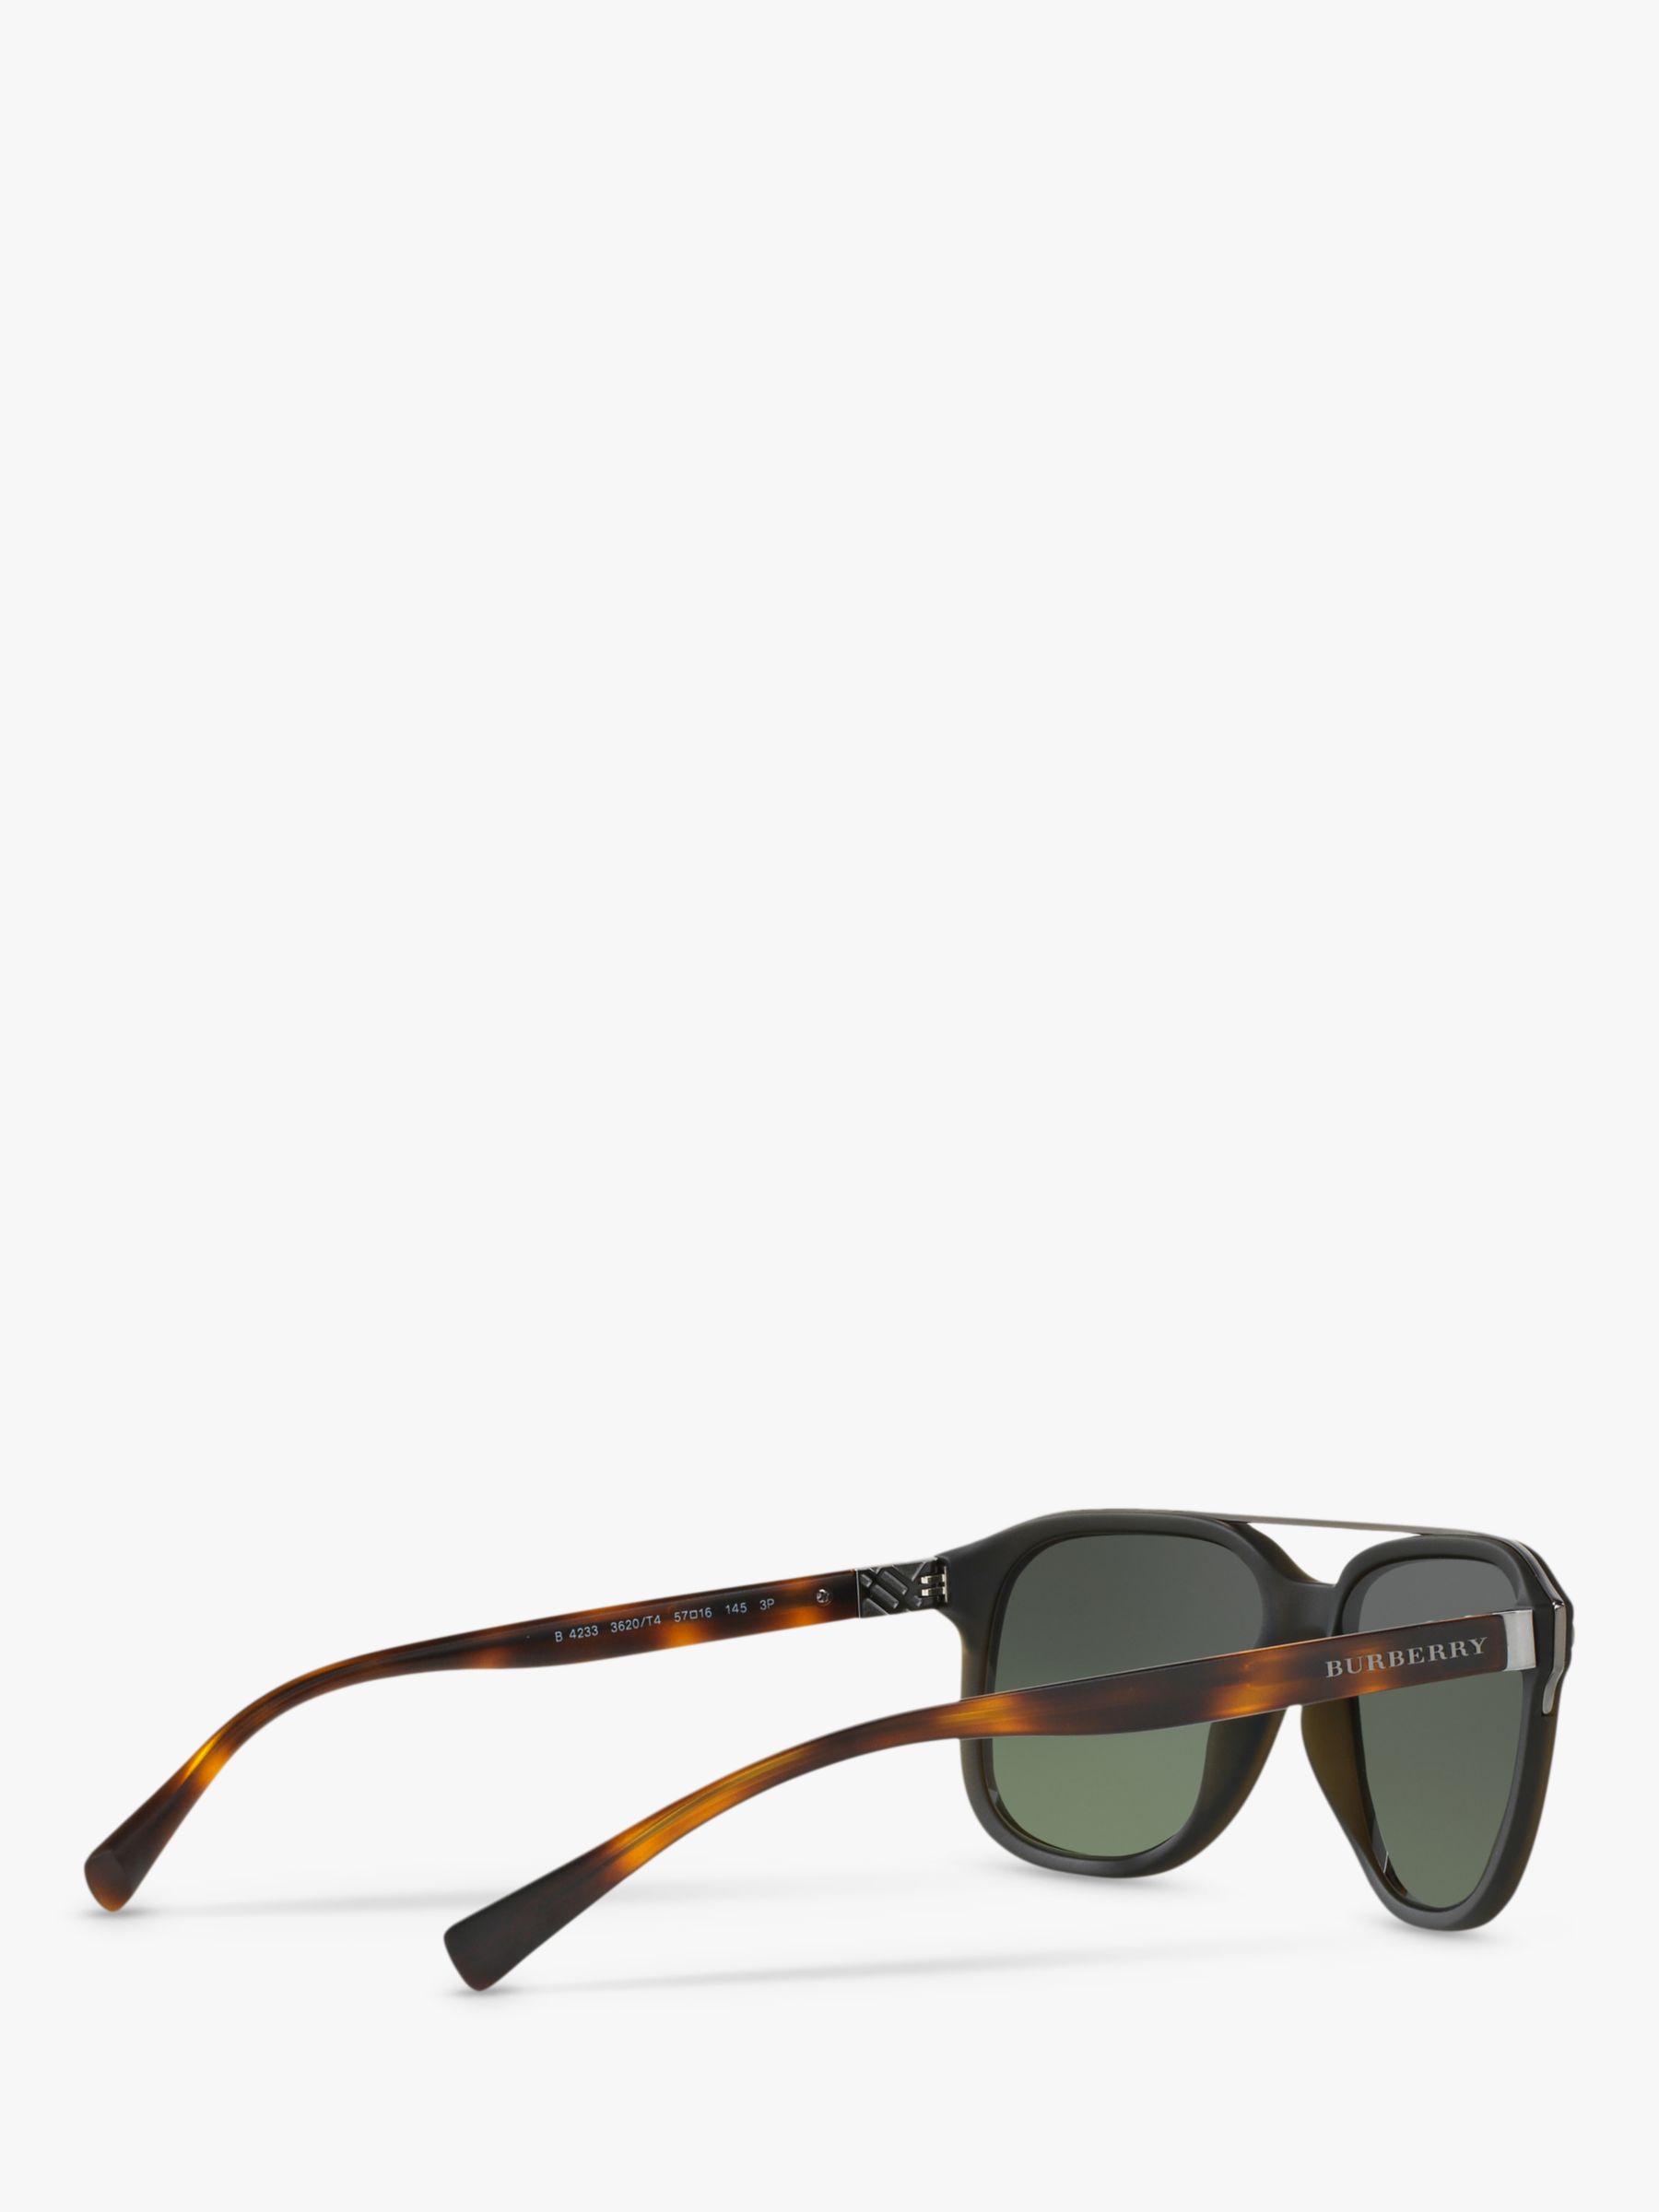 burberry sunglasses b 4233